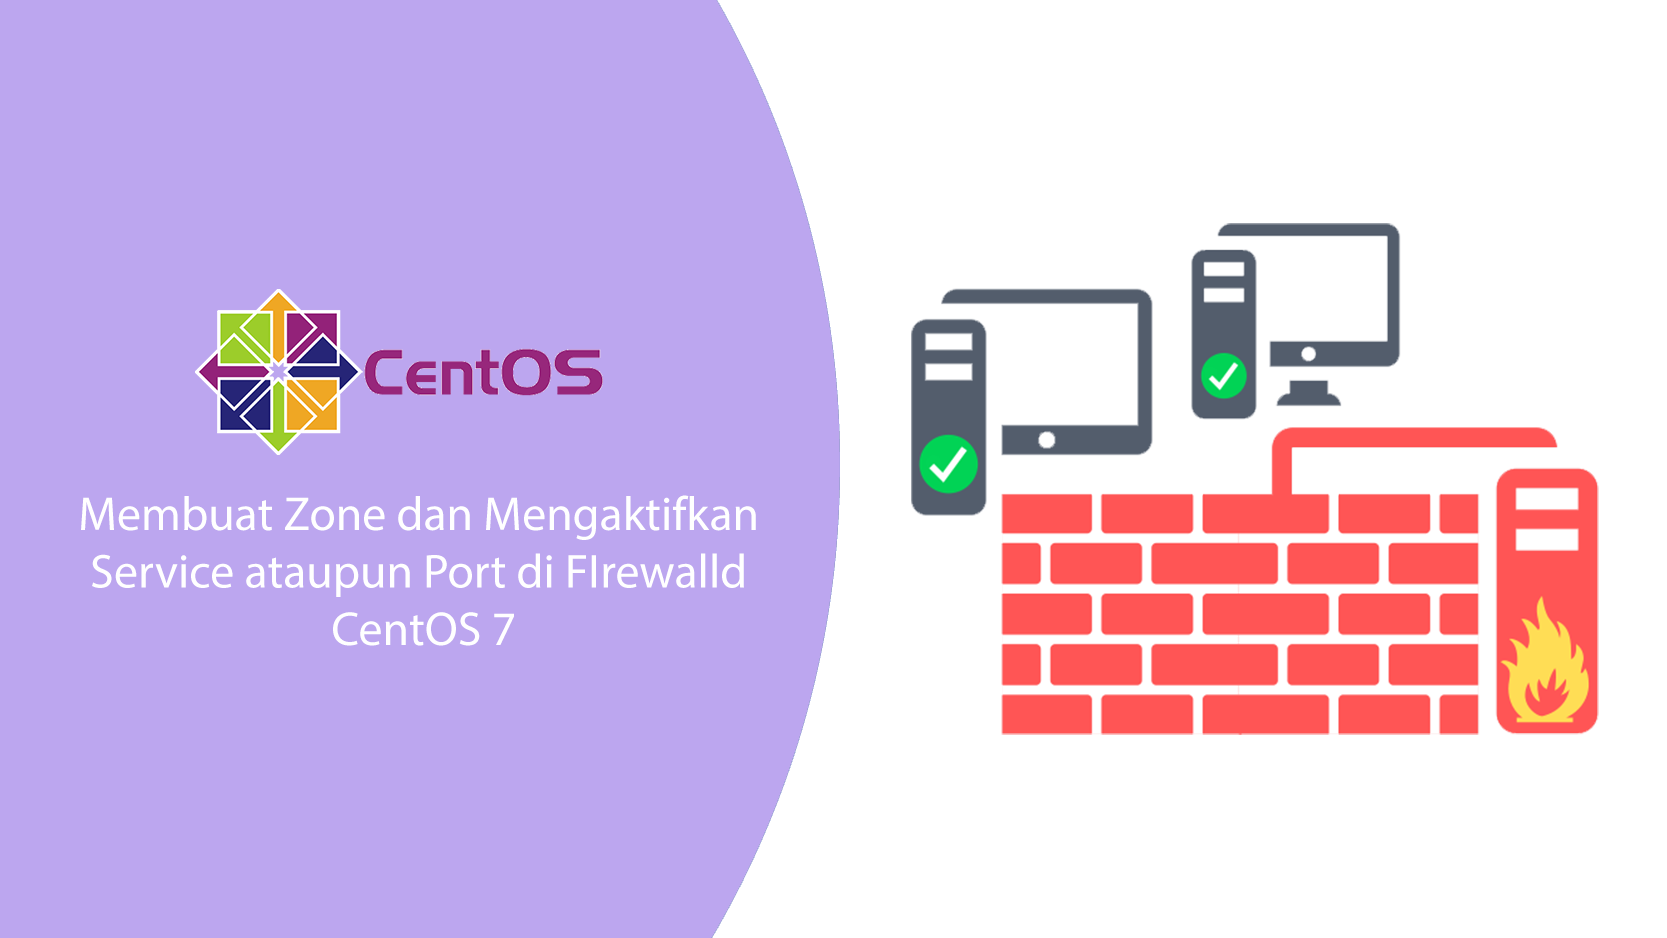 Membuat Zone dan Mengaktifkan Service ataupun Port di Firewalld CentOS 7